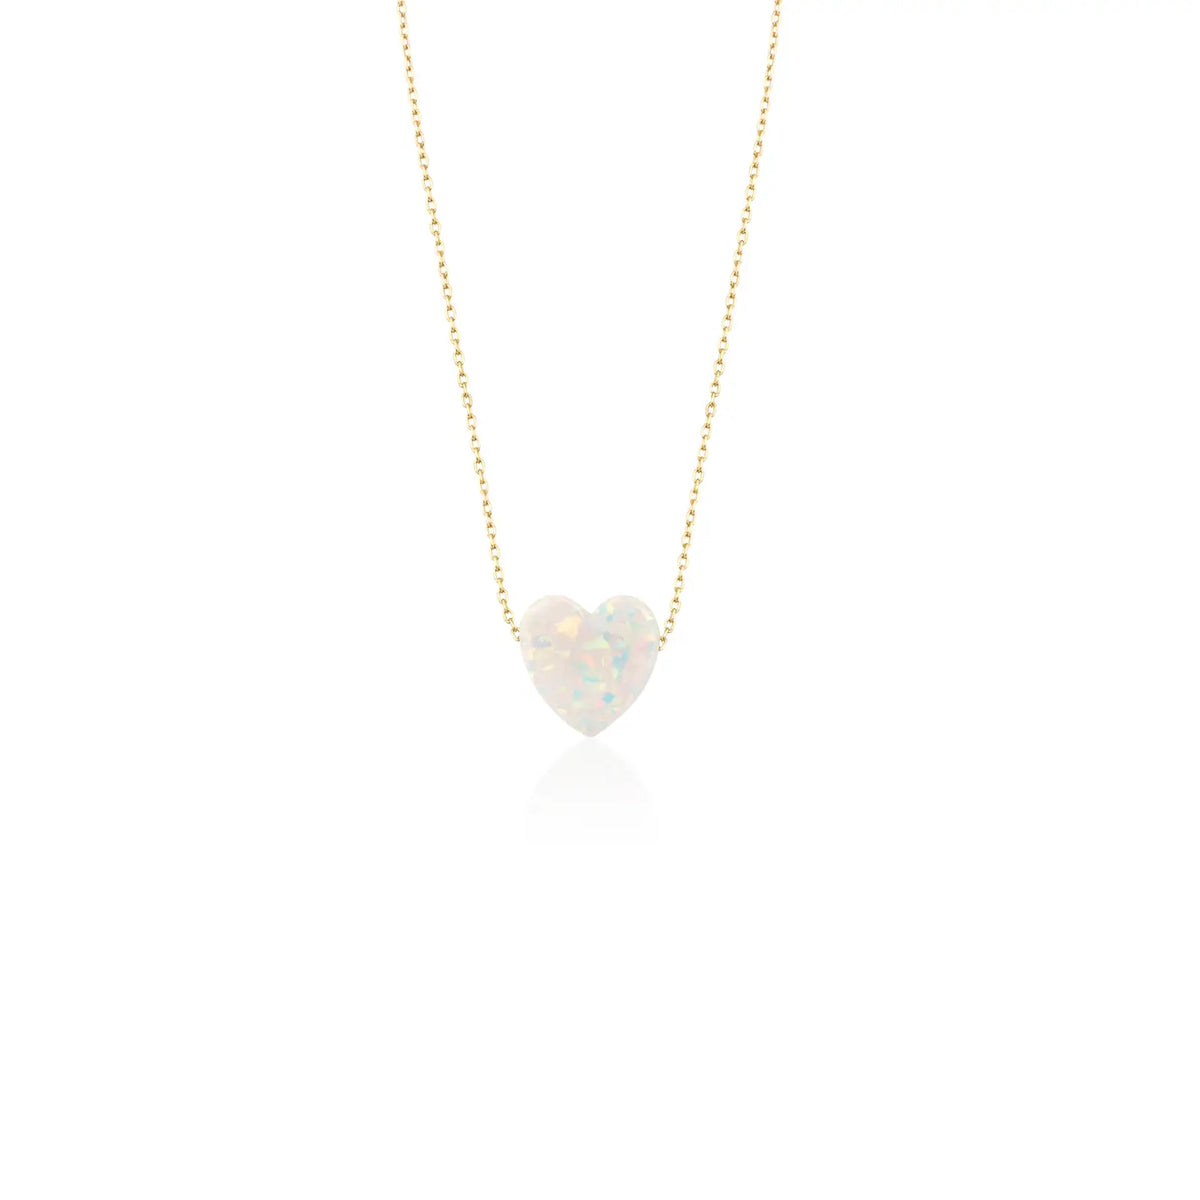 Chakarr - Opal Heart Pendant Necklace - prodottihaccp